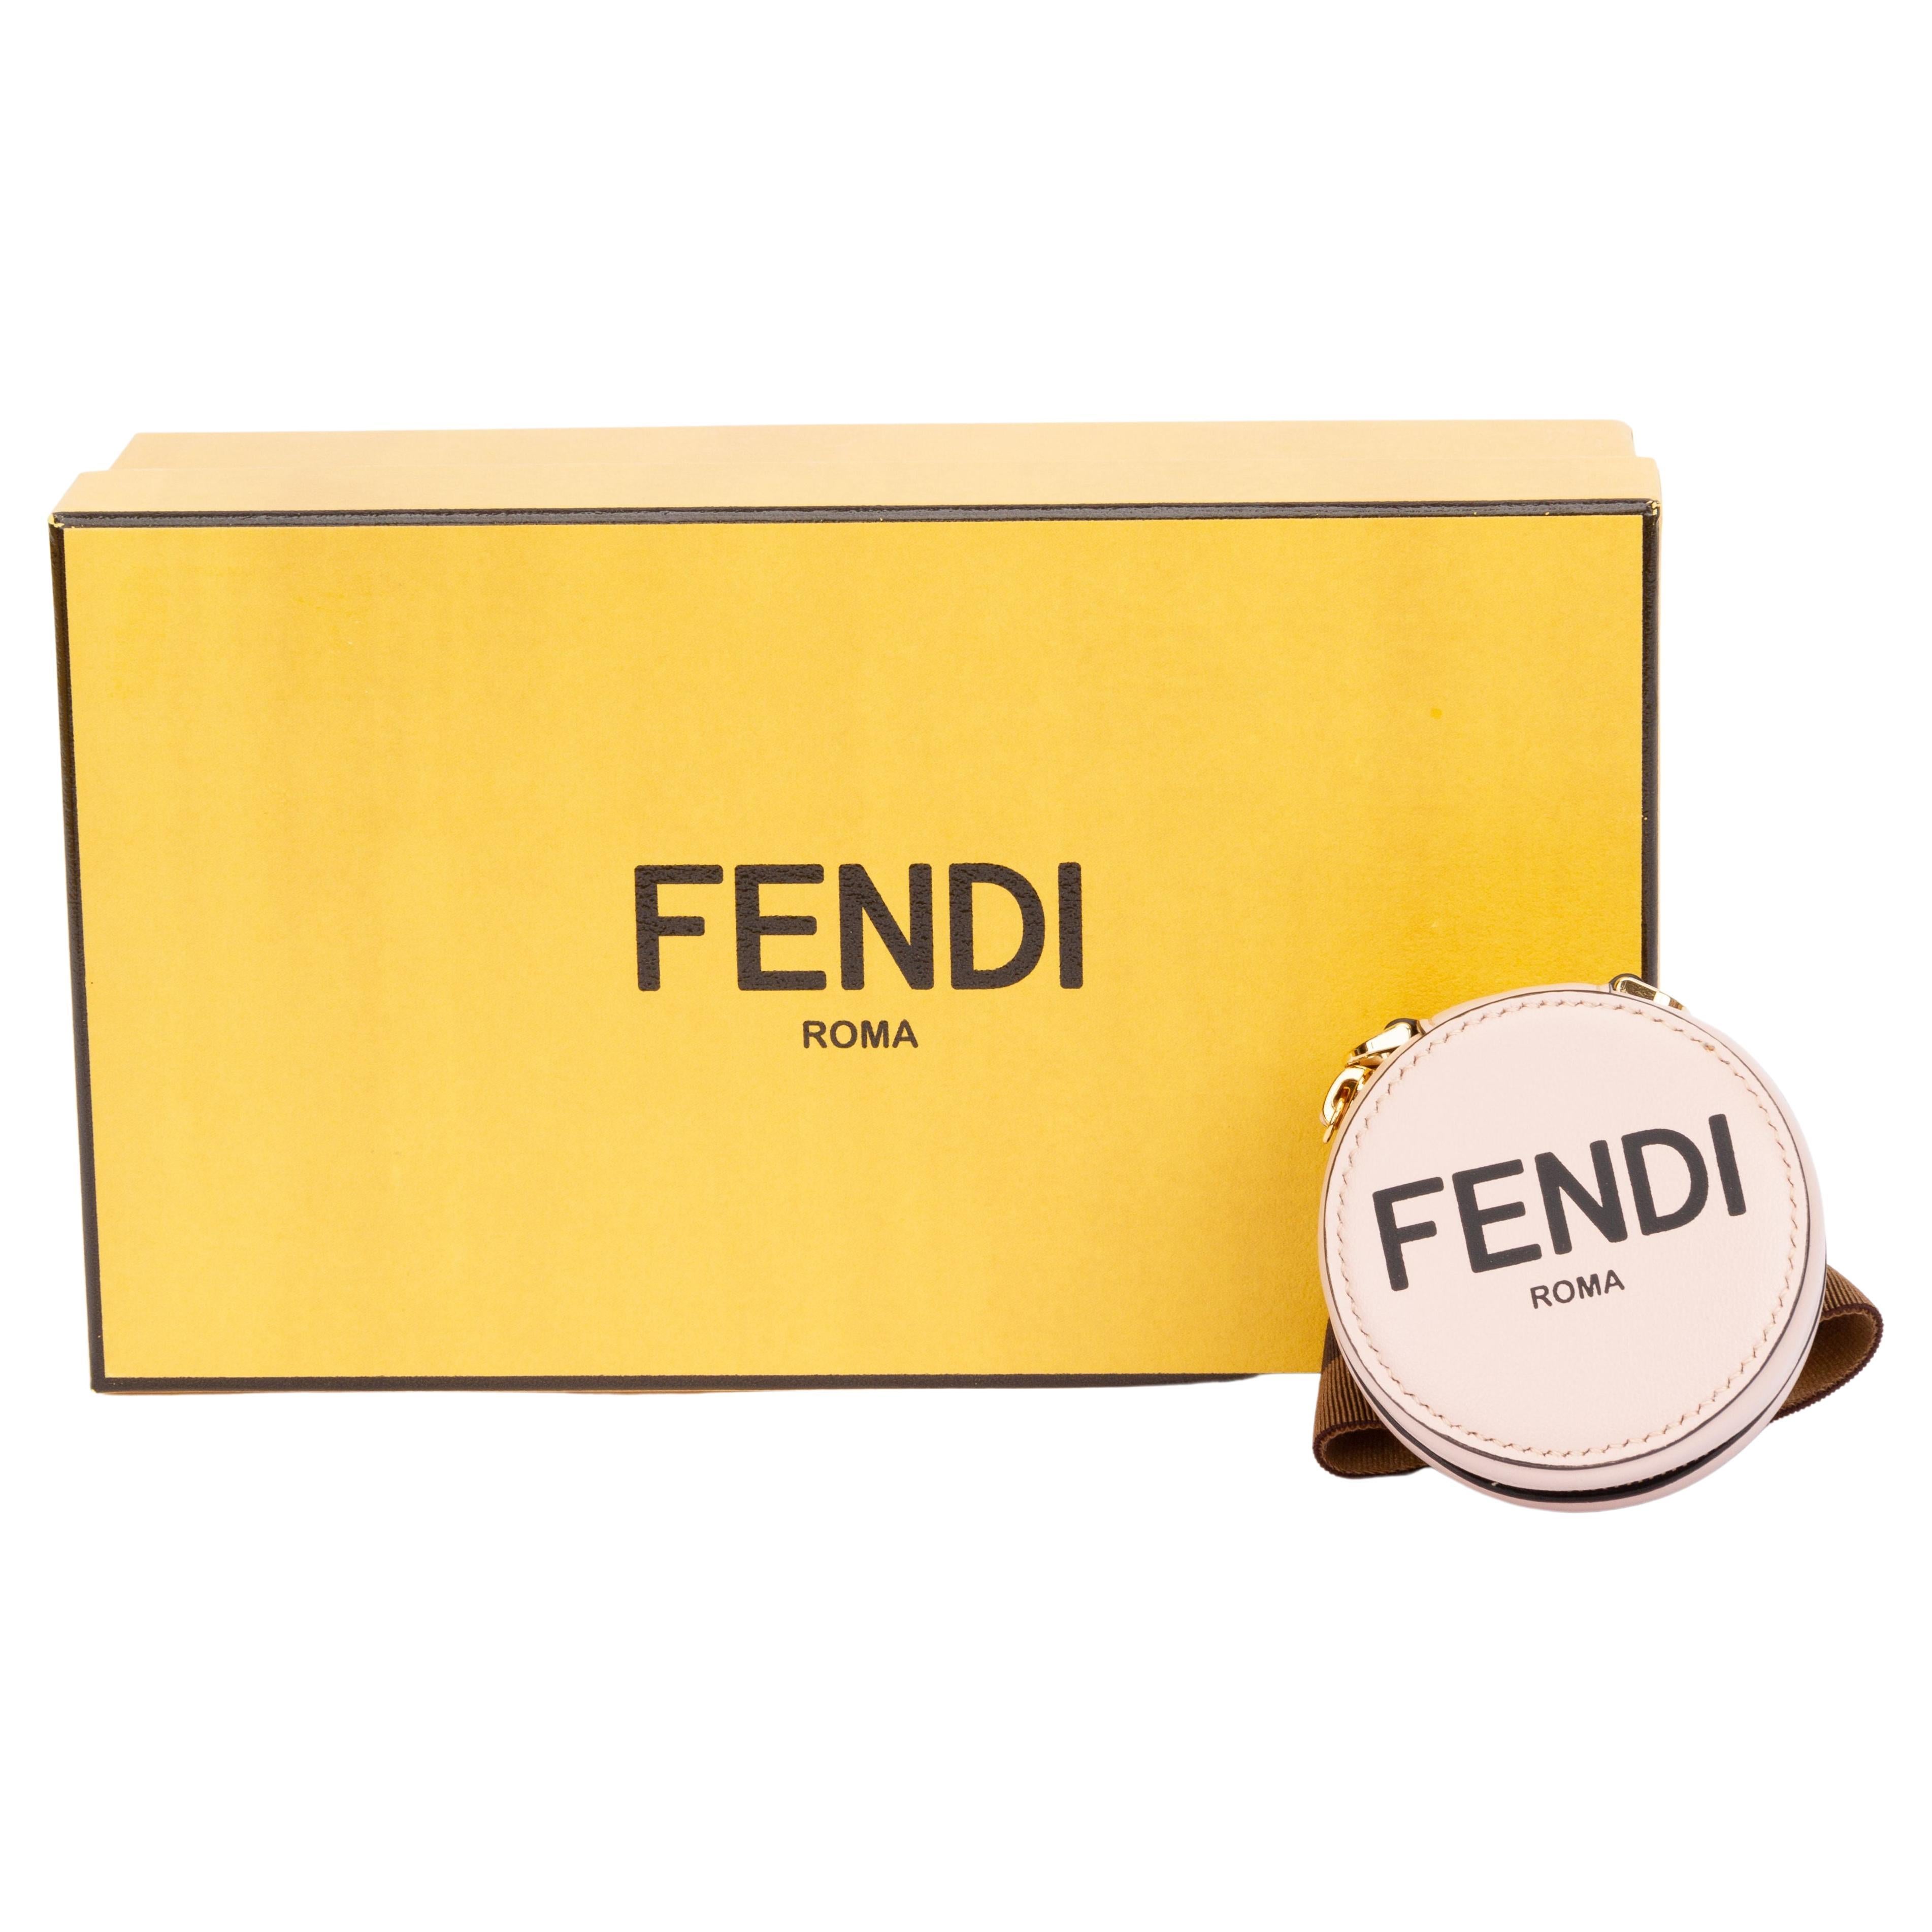 Fendi BNIB Wrist Charm-Pods Case For Sale